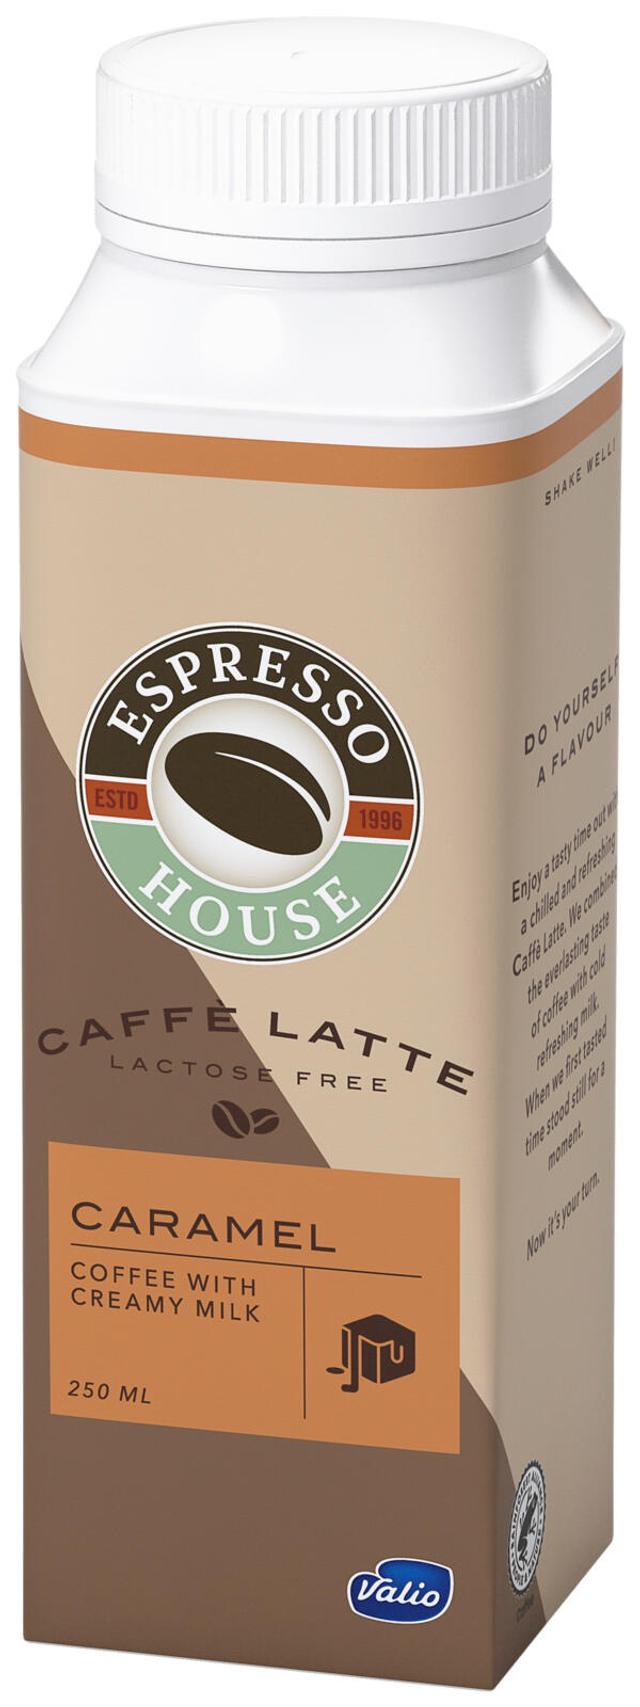 Espresso House Caffè Latte Caramel lactose free 250 ml